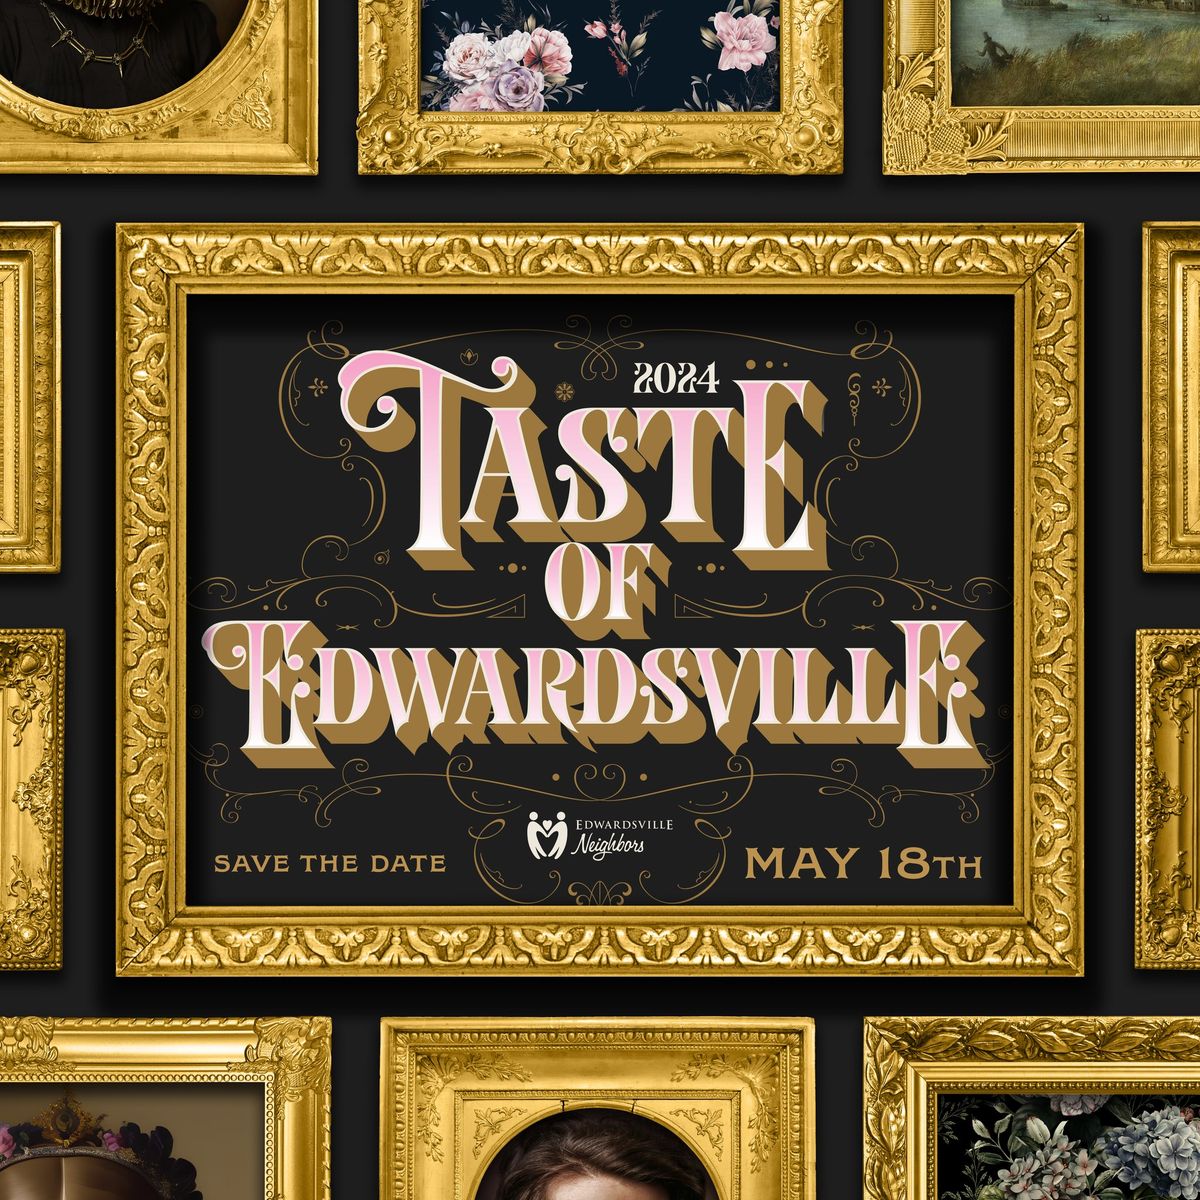 Taste of Edwardsville 2024